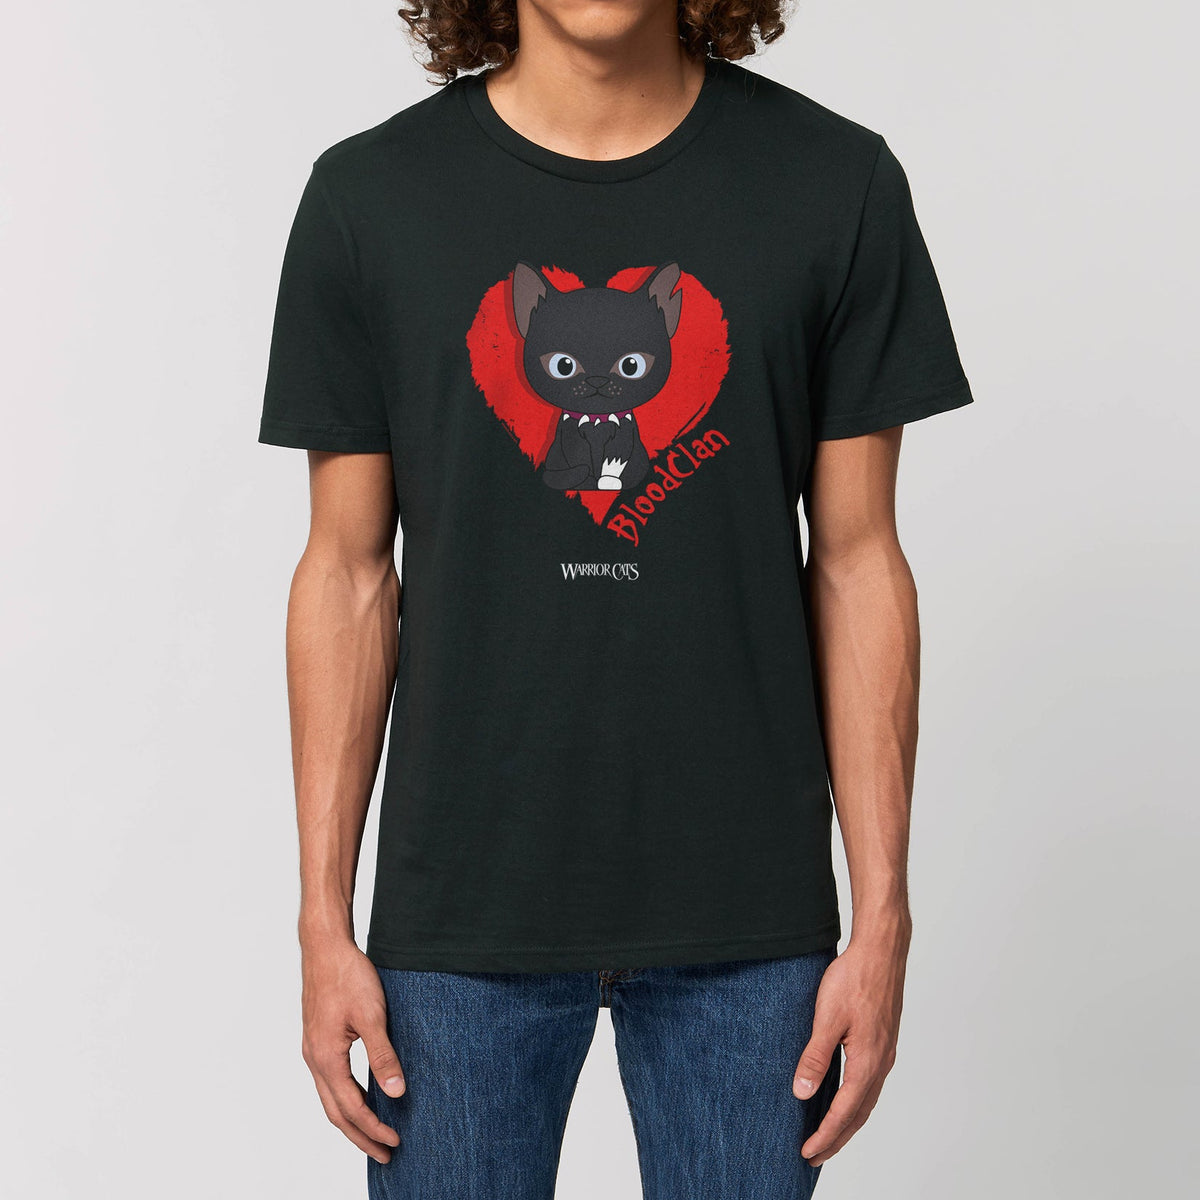 BloodClan - Adult Unisex T-Shirt